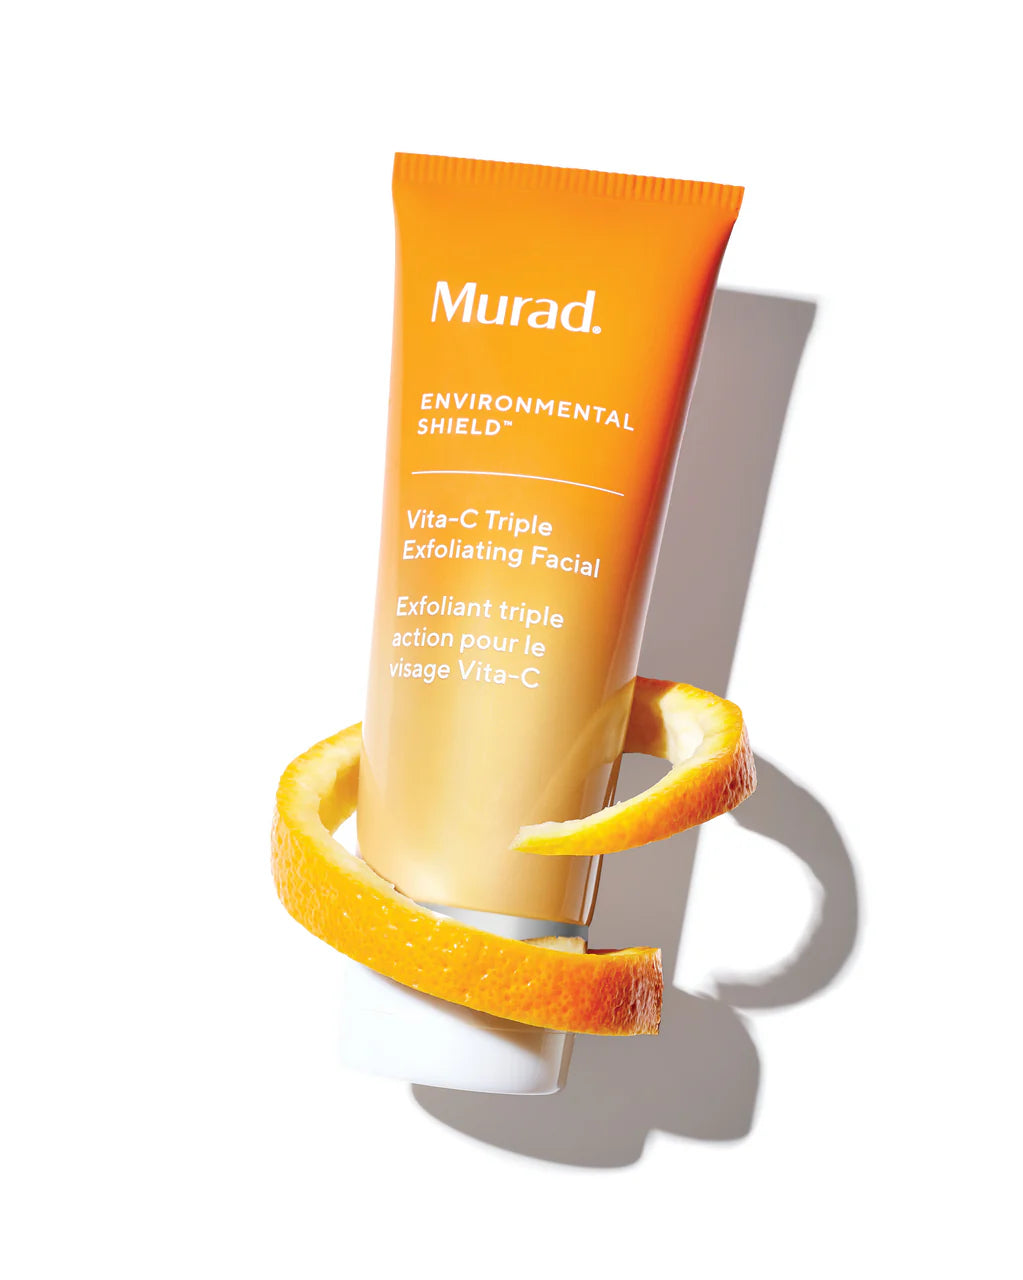 Murad Sale. Murad 15% Off. Murad Vita-C Triple Exfoliating Facial